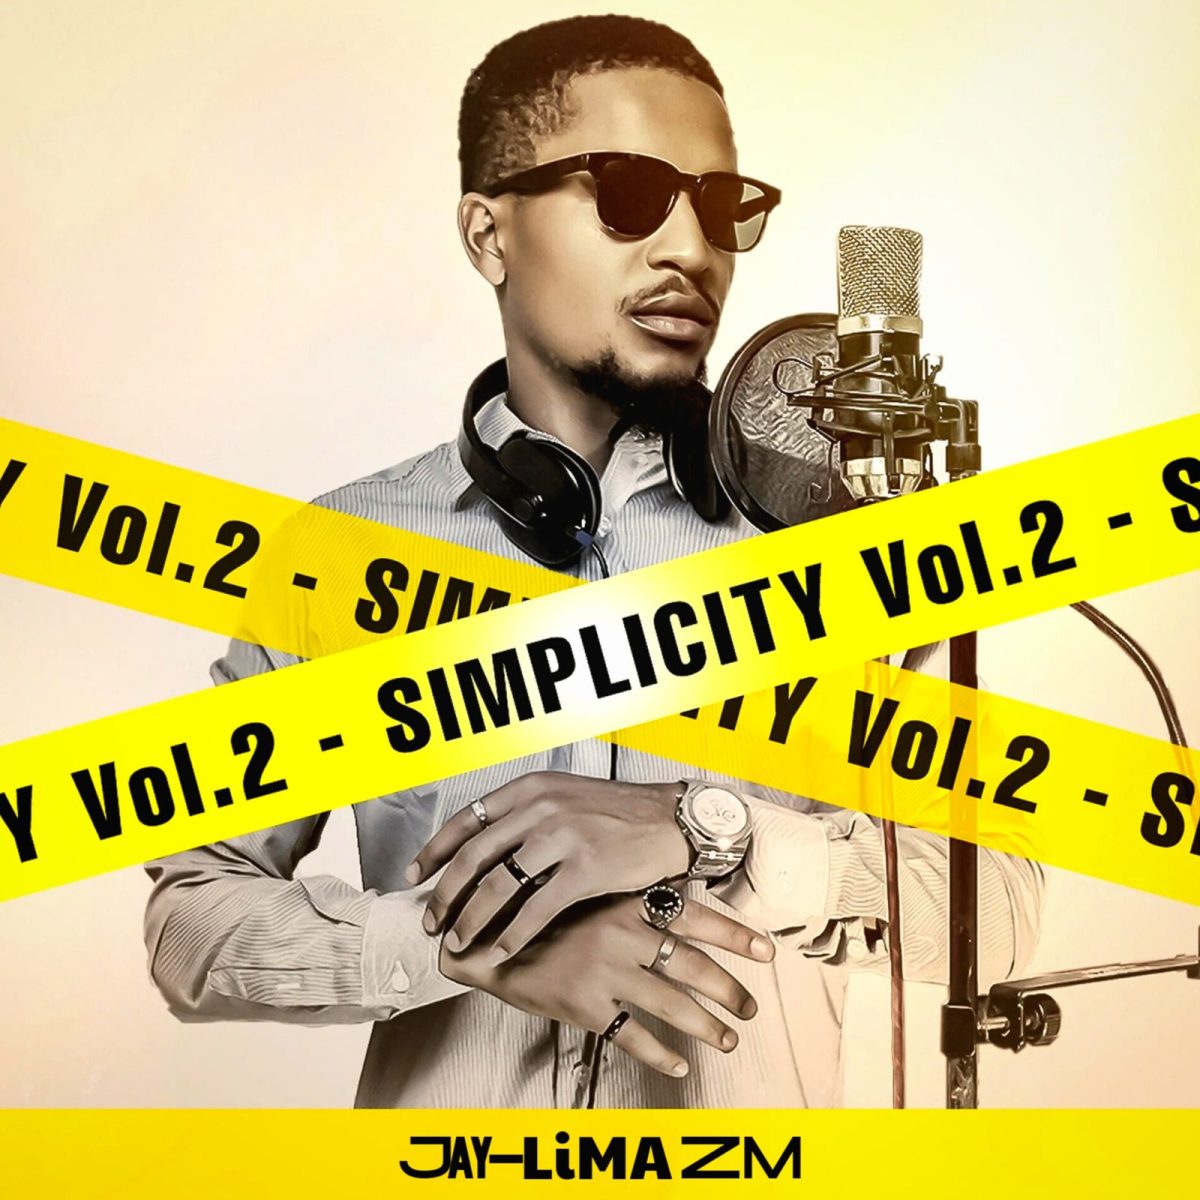 Jay Lima - Simplicity Vol.2 (Full ALBUM)